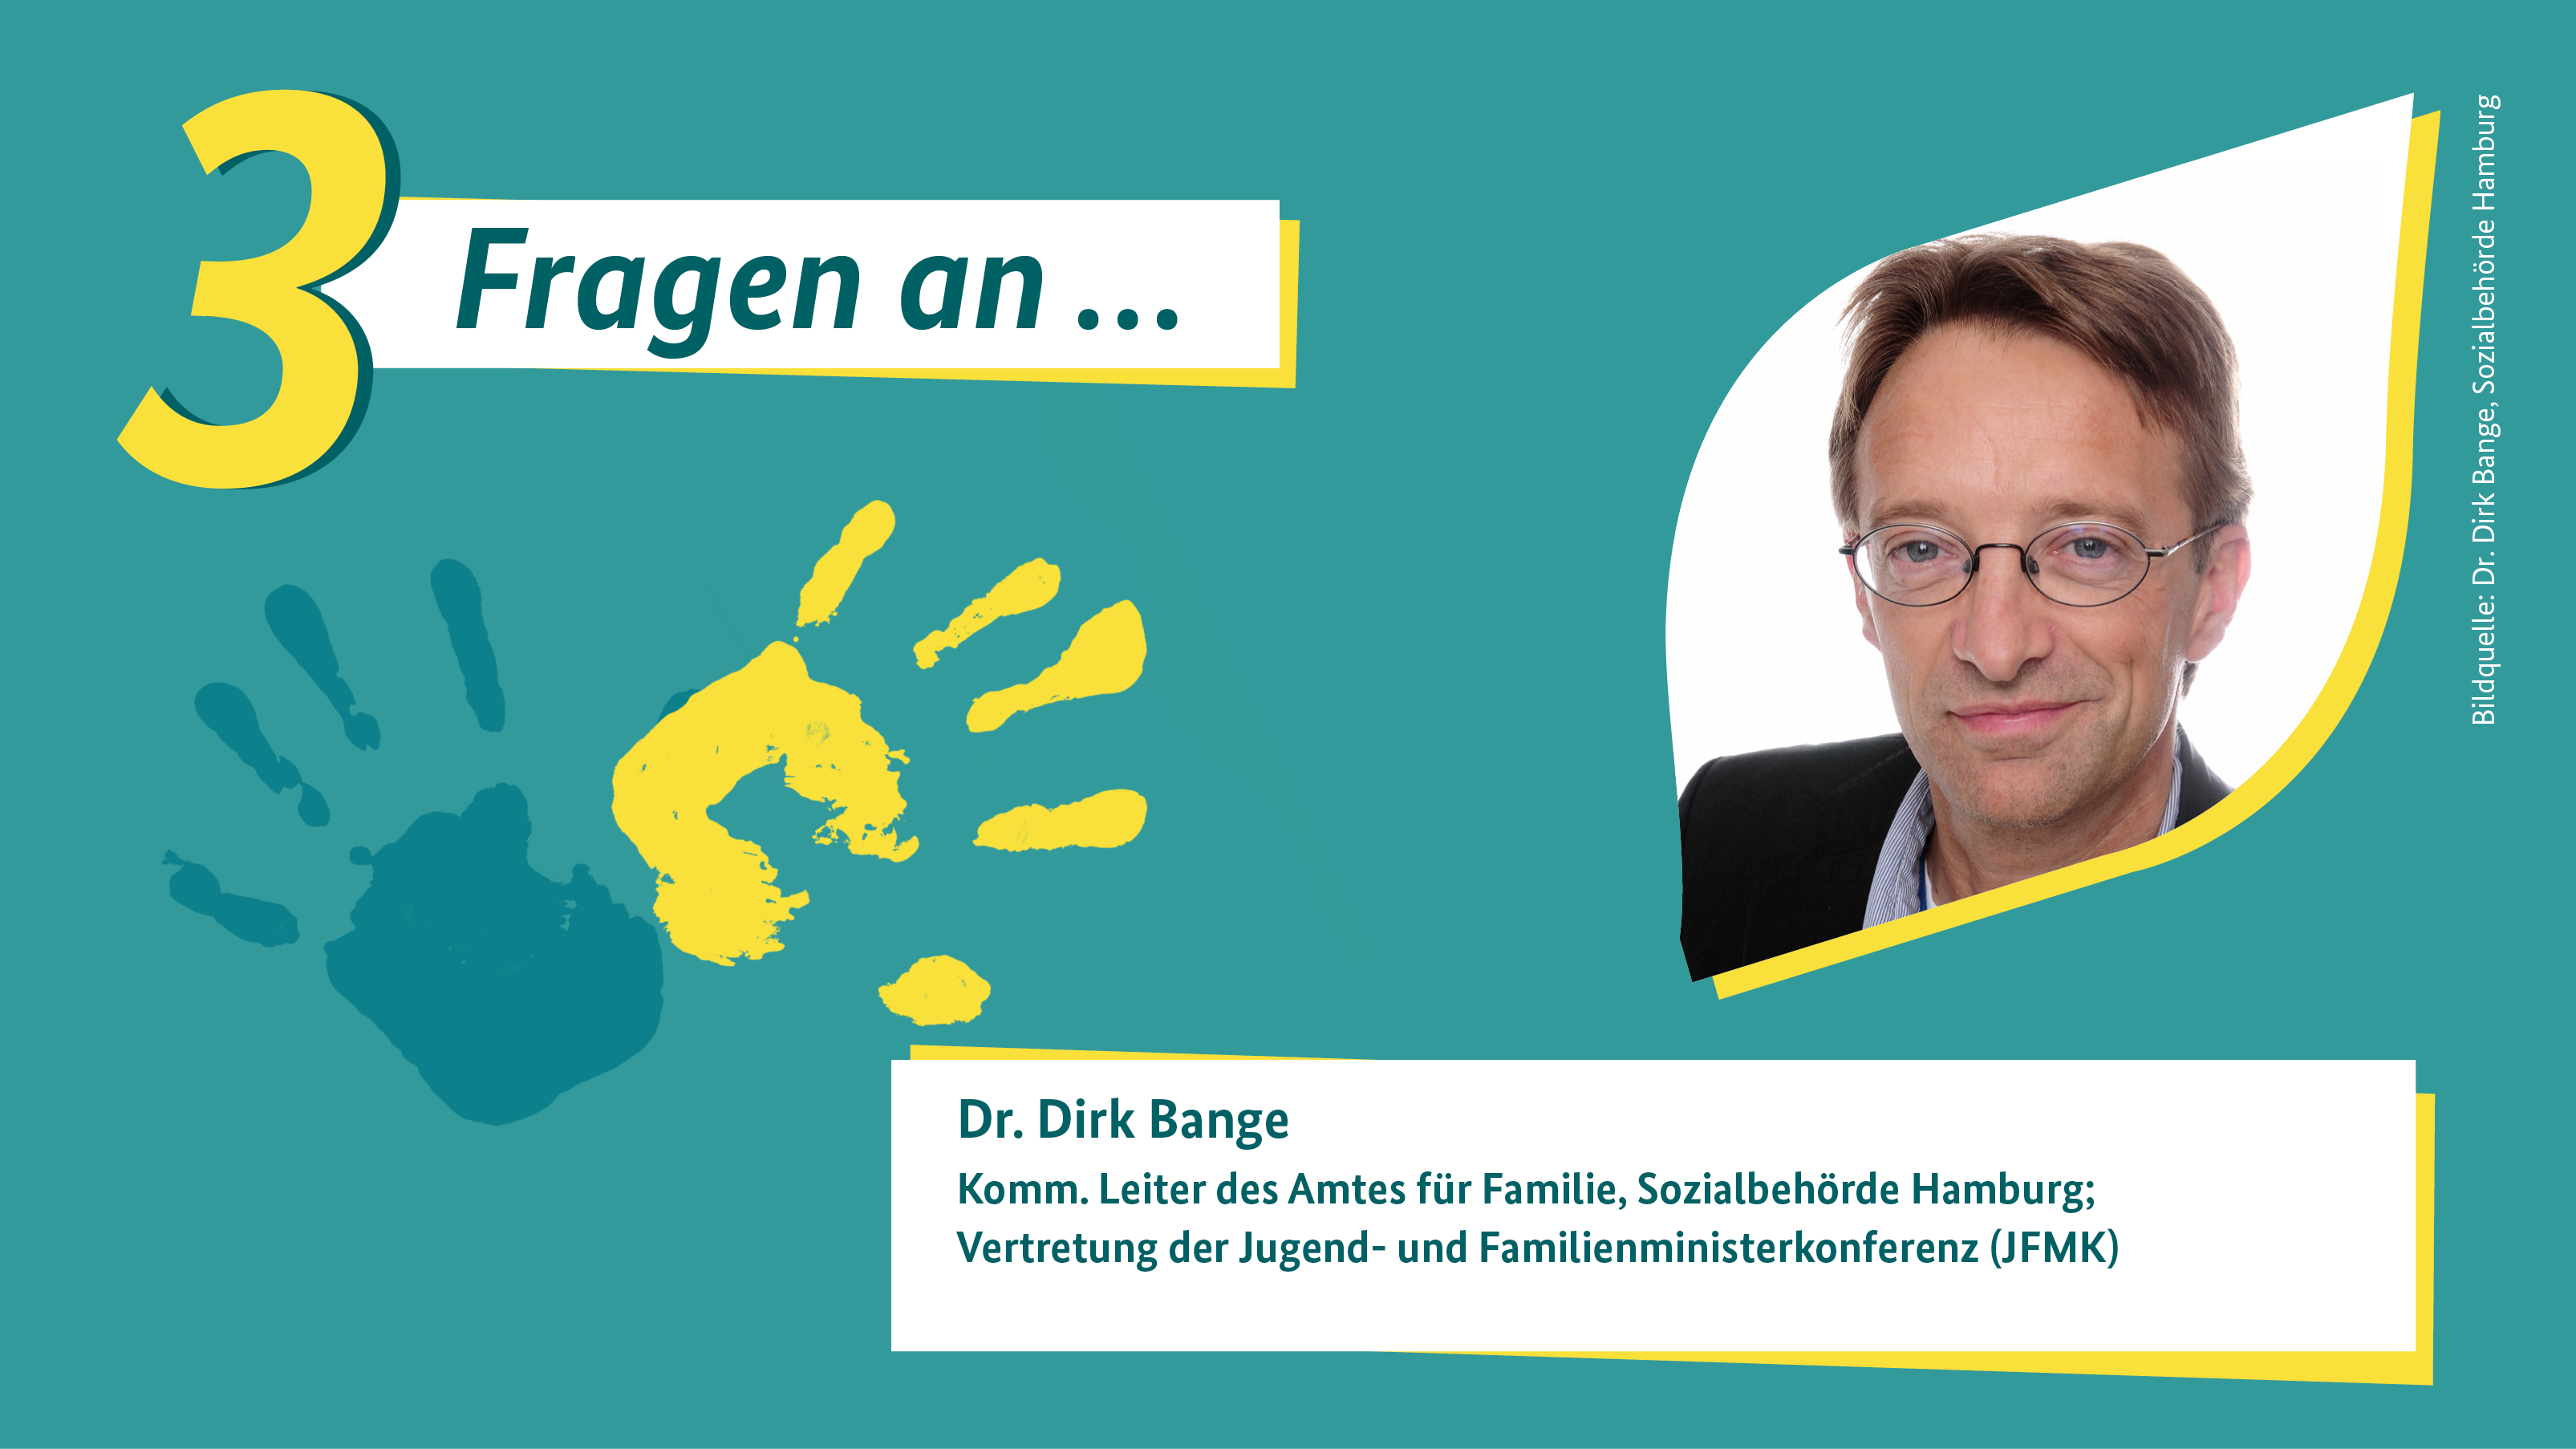 Grafik zu den 3 Fragen an Dr. Dirk Bange